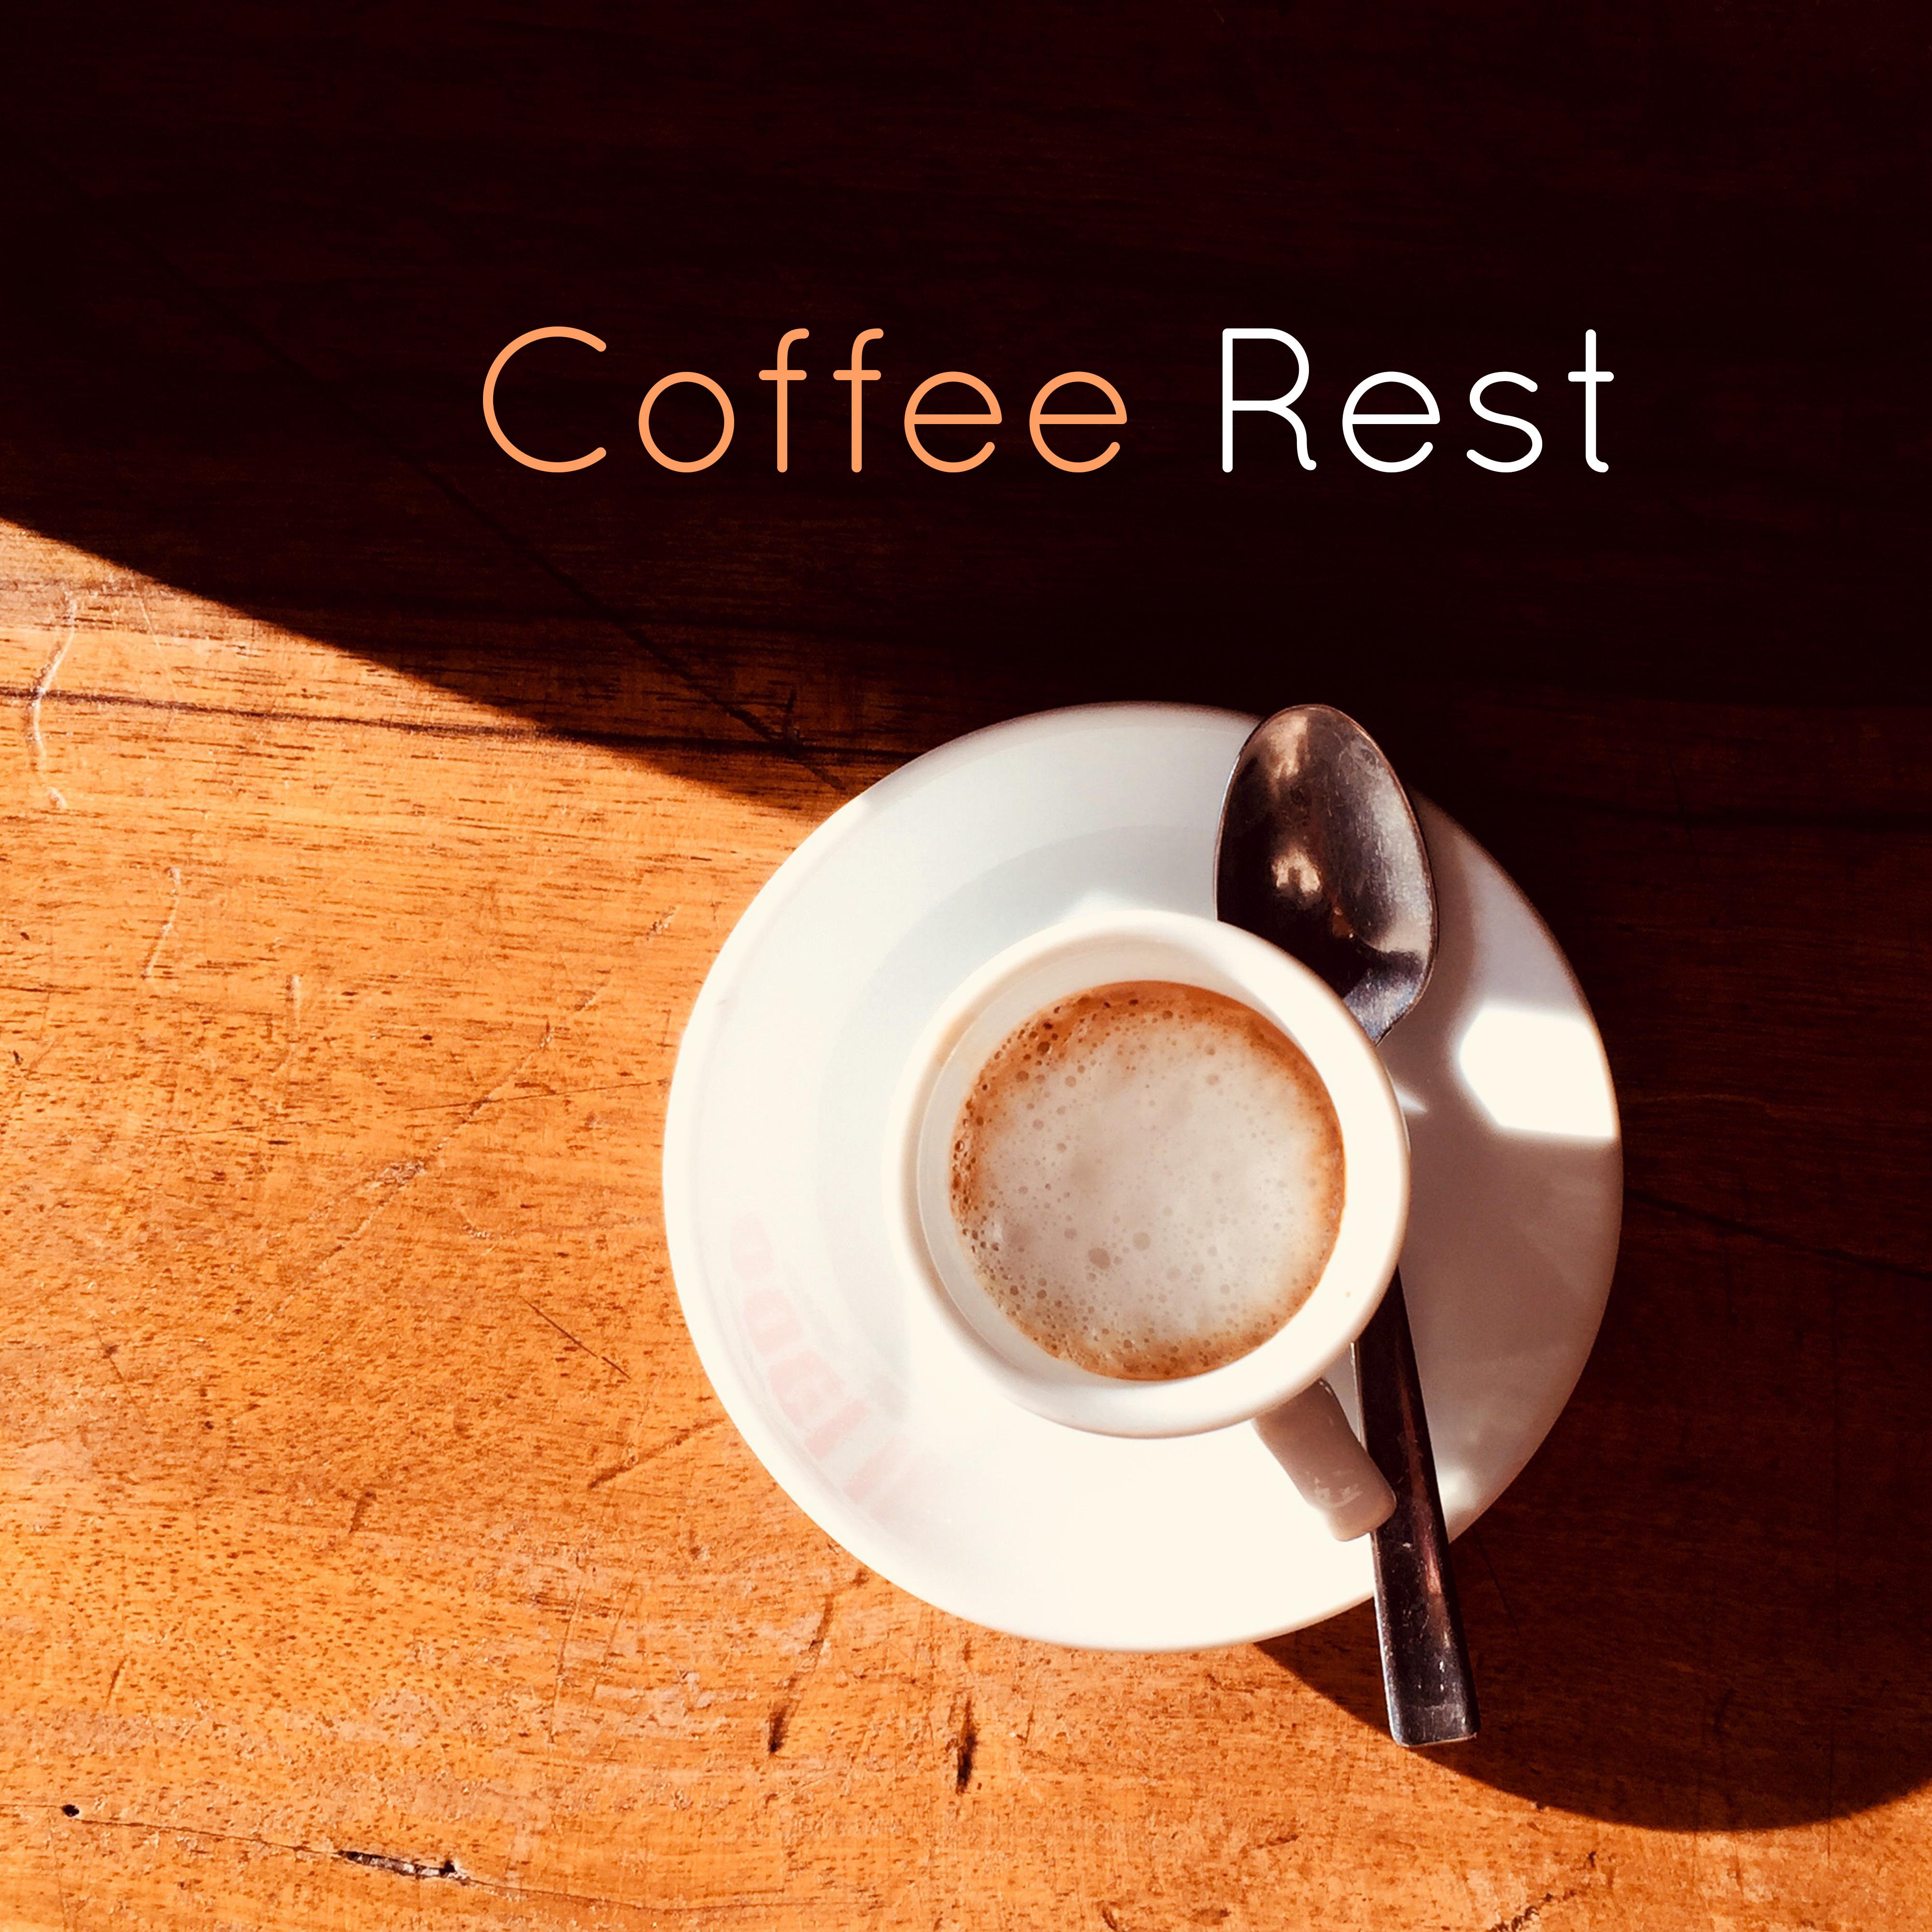 Coffee Rest